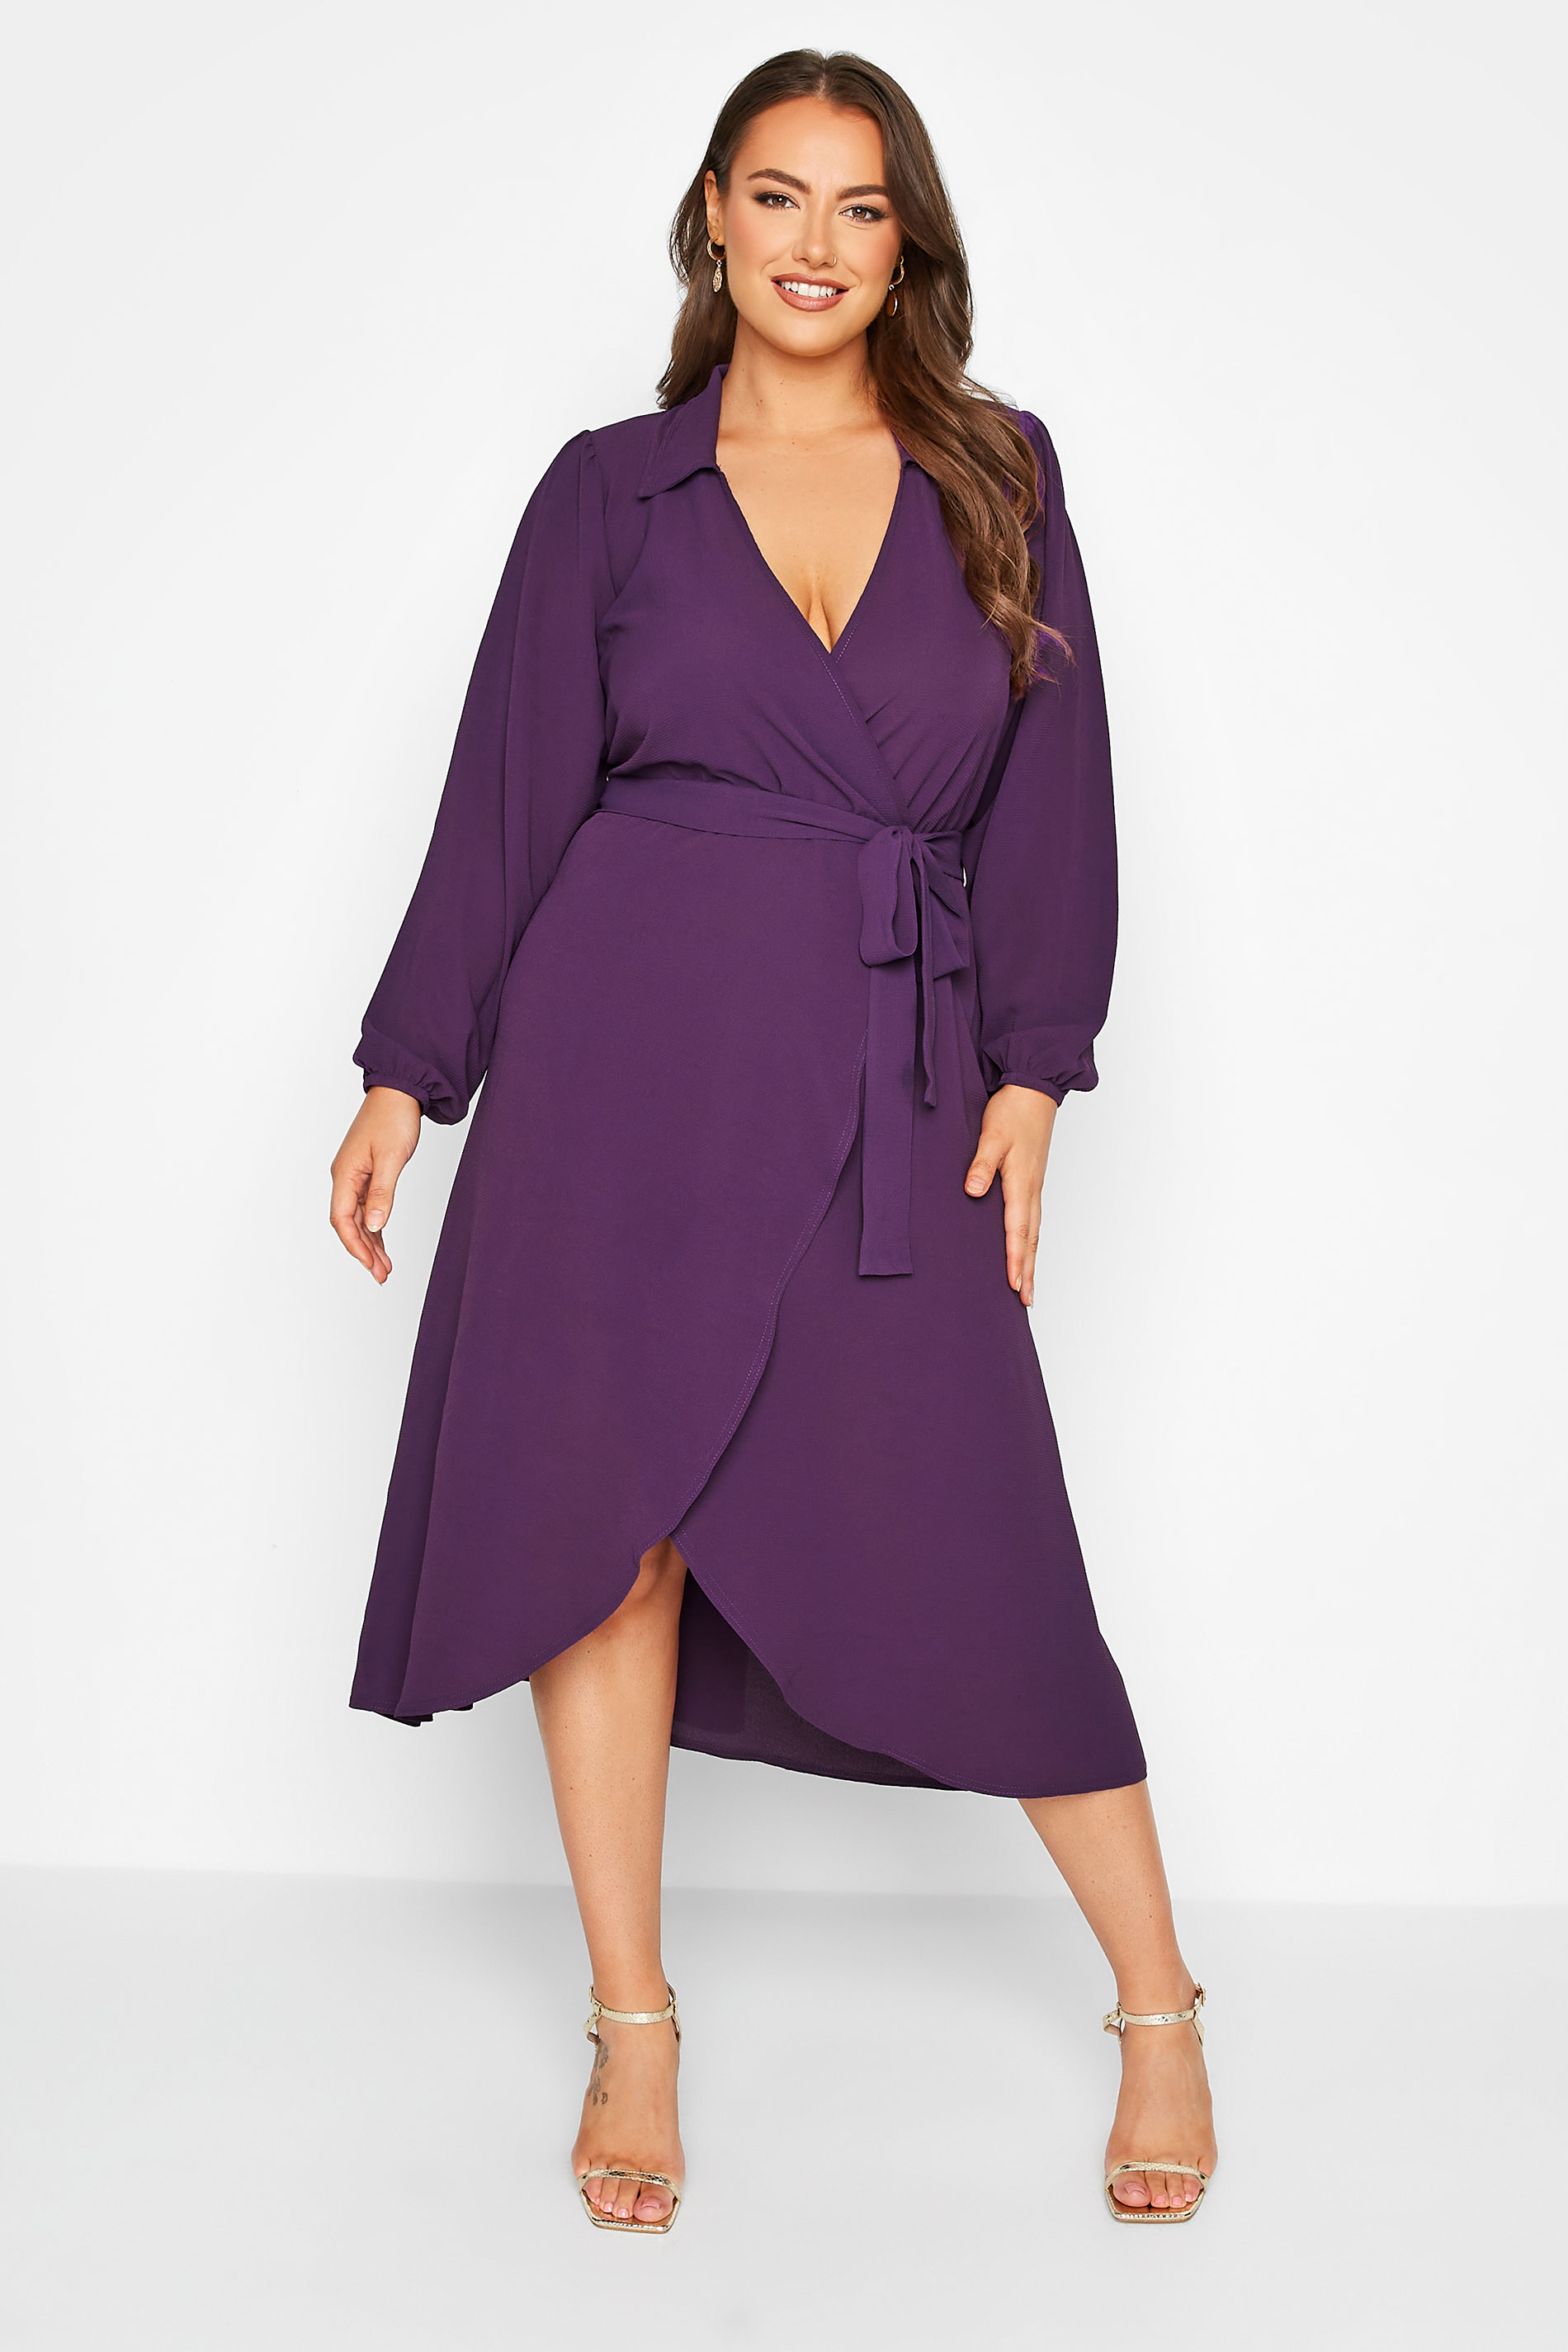 LIMITED COLLECTION Curve Purple Wrap Dress 1